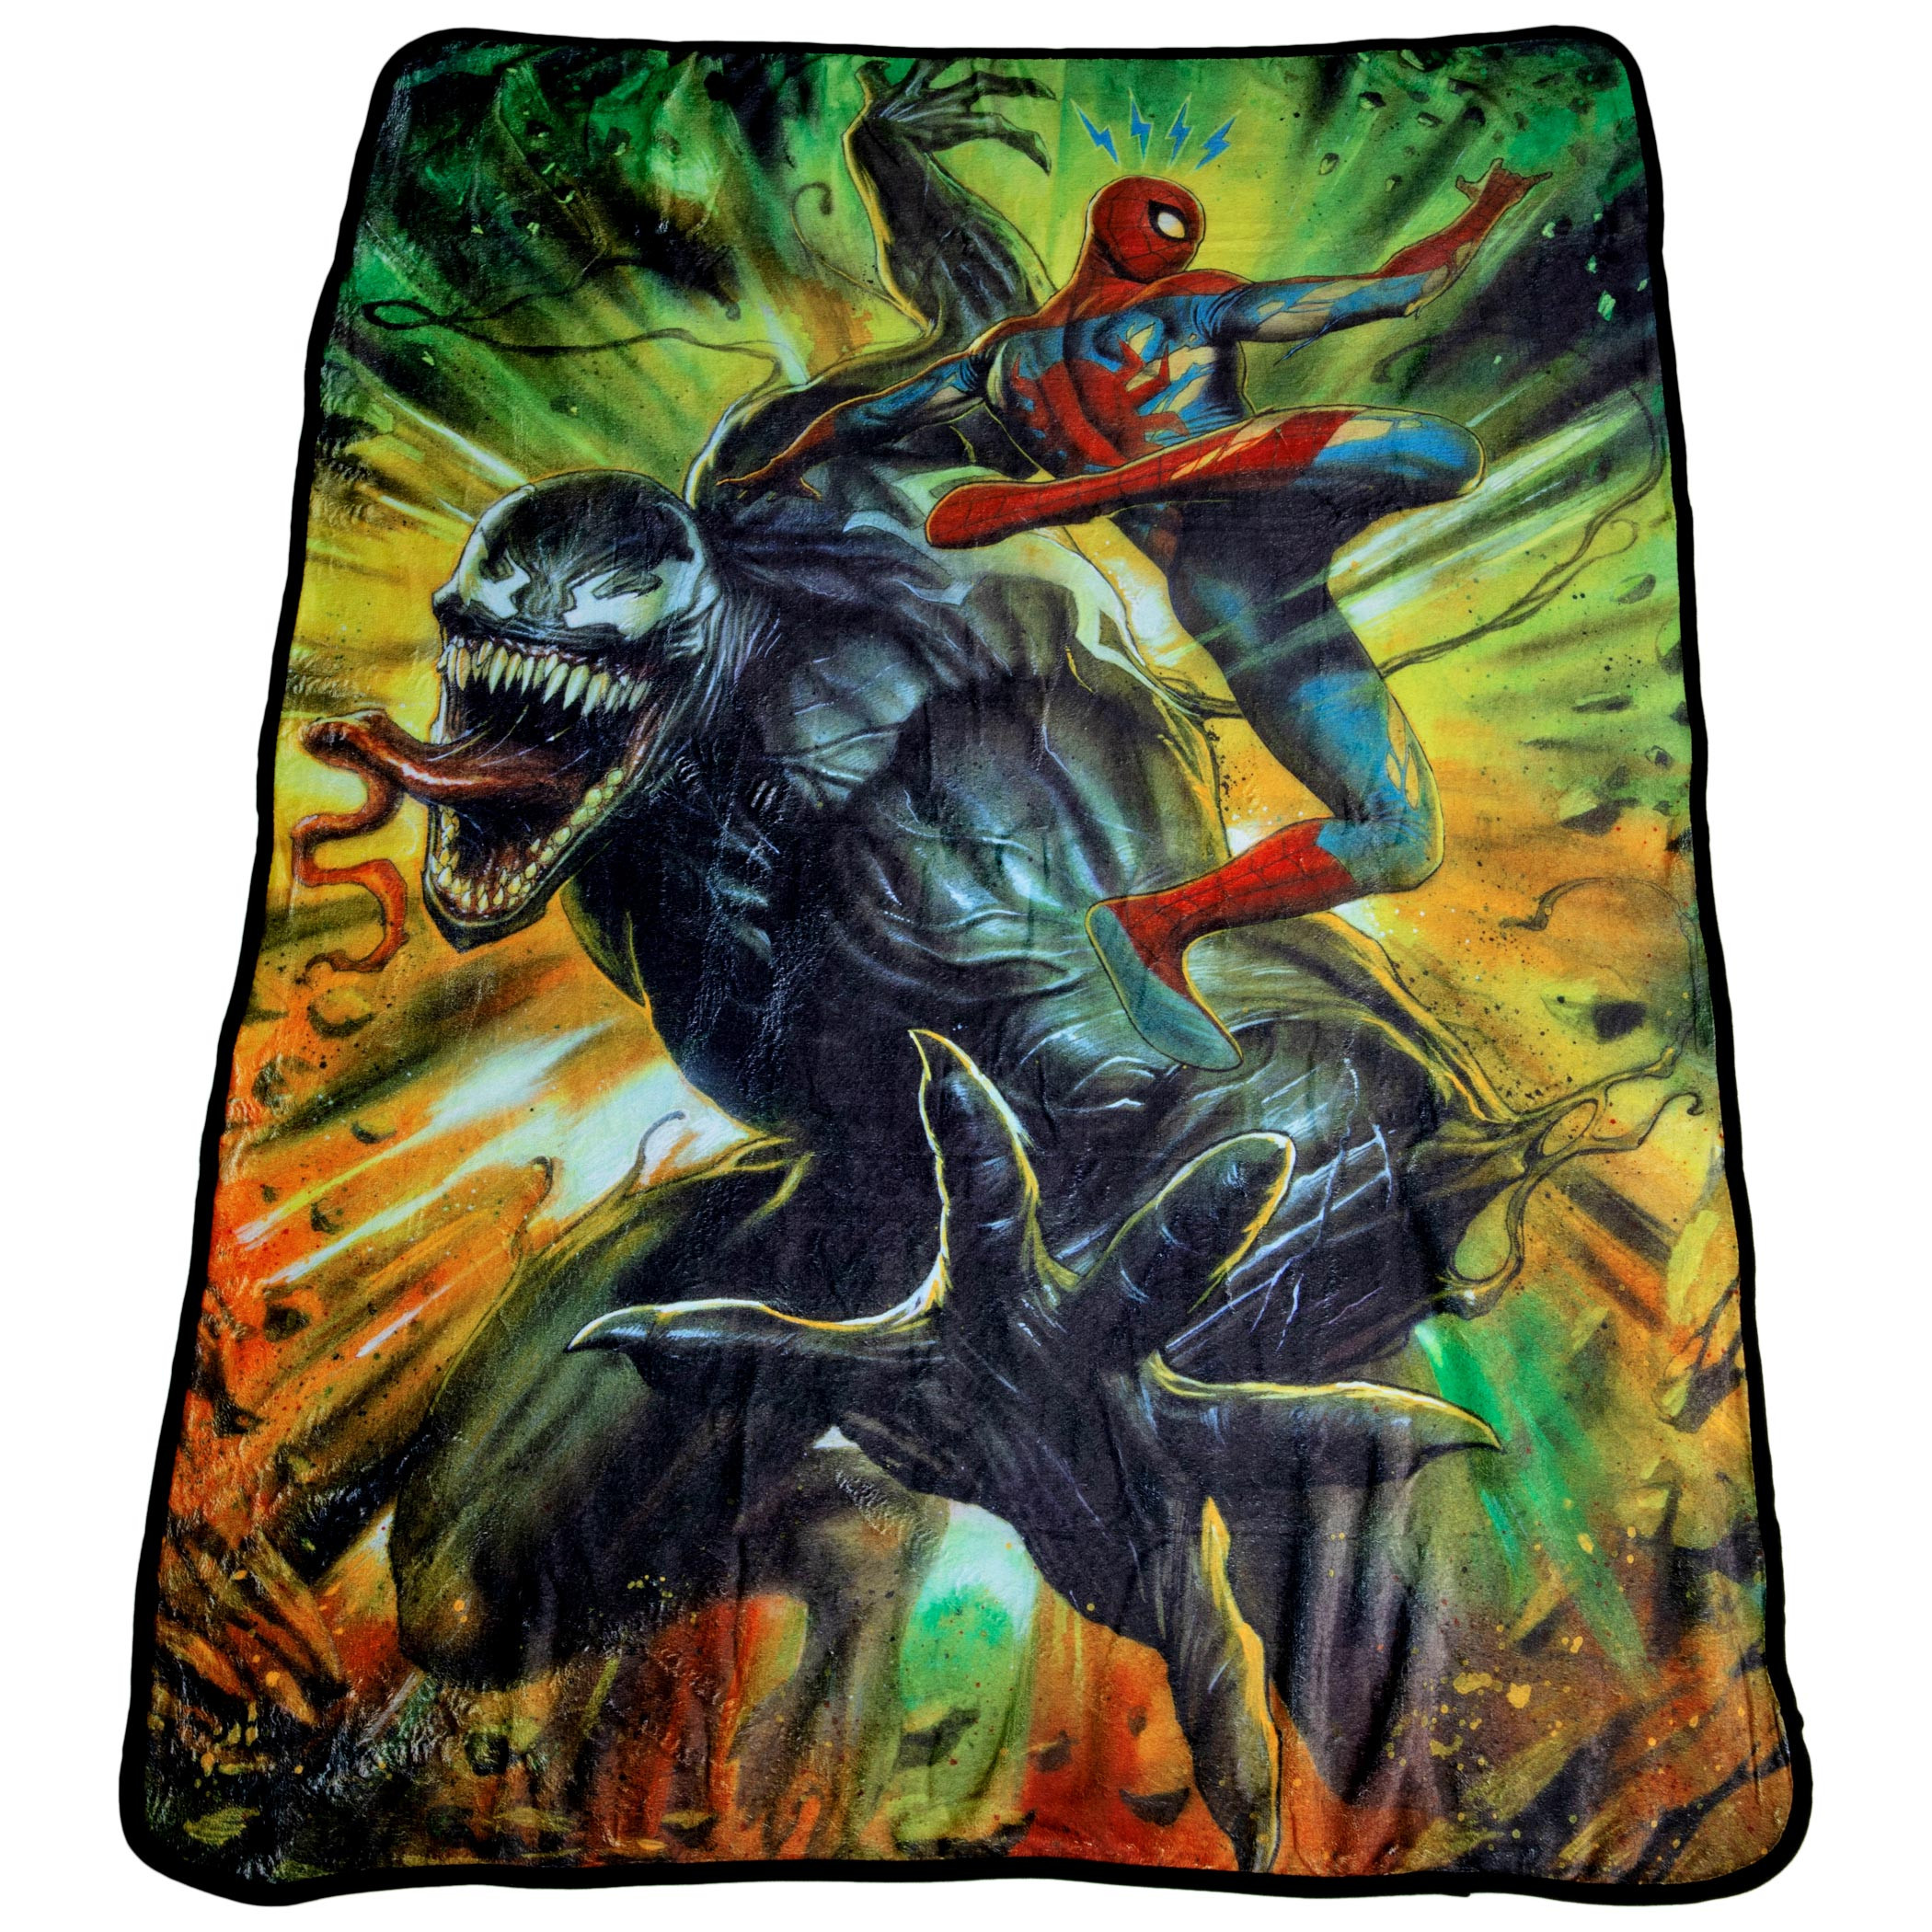 Spider-Man Vs. Venom Fleece Throw Blanket